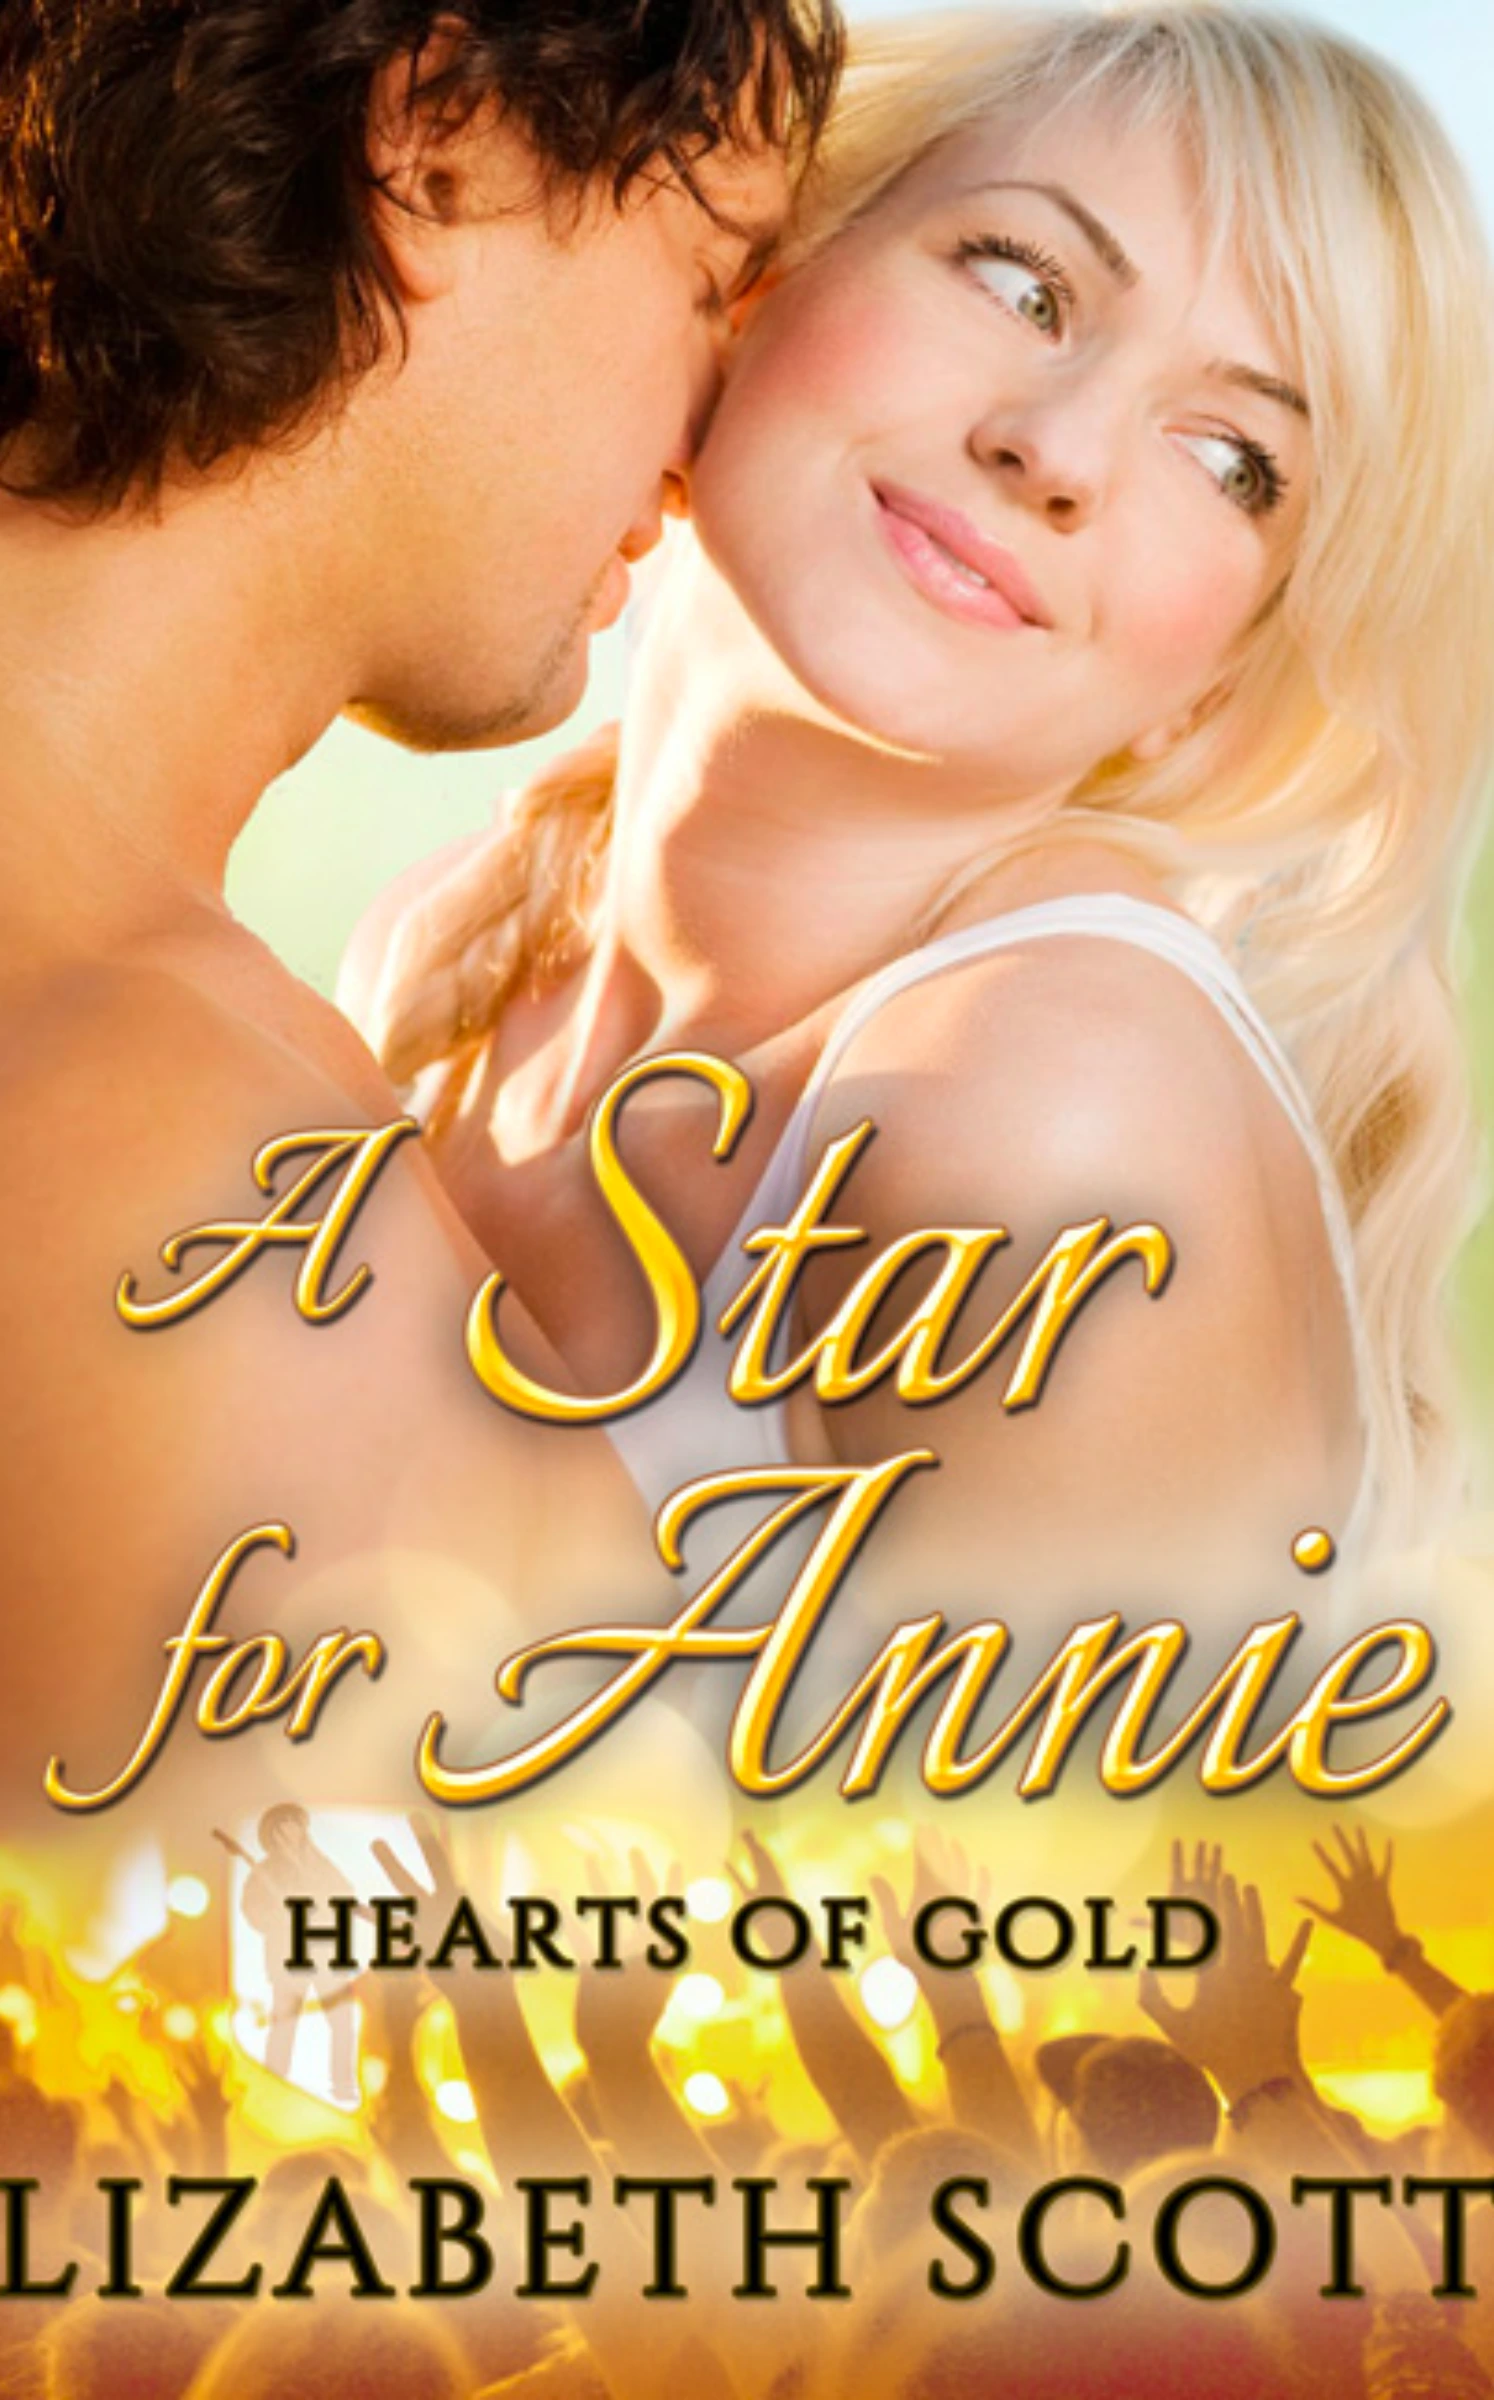 A Star for Annie, Hearts of Gold, Lizabeth Scott